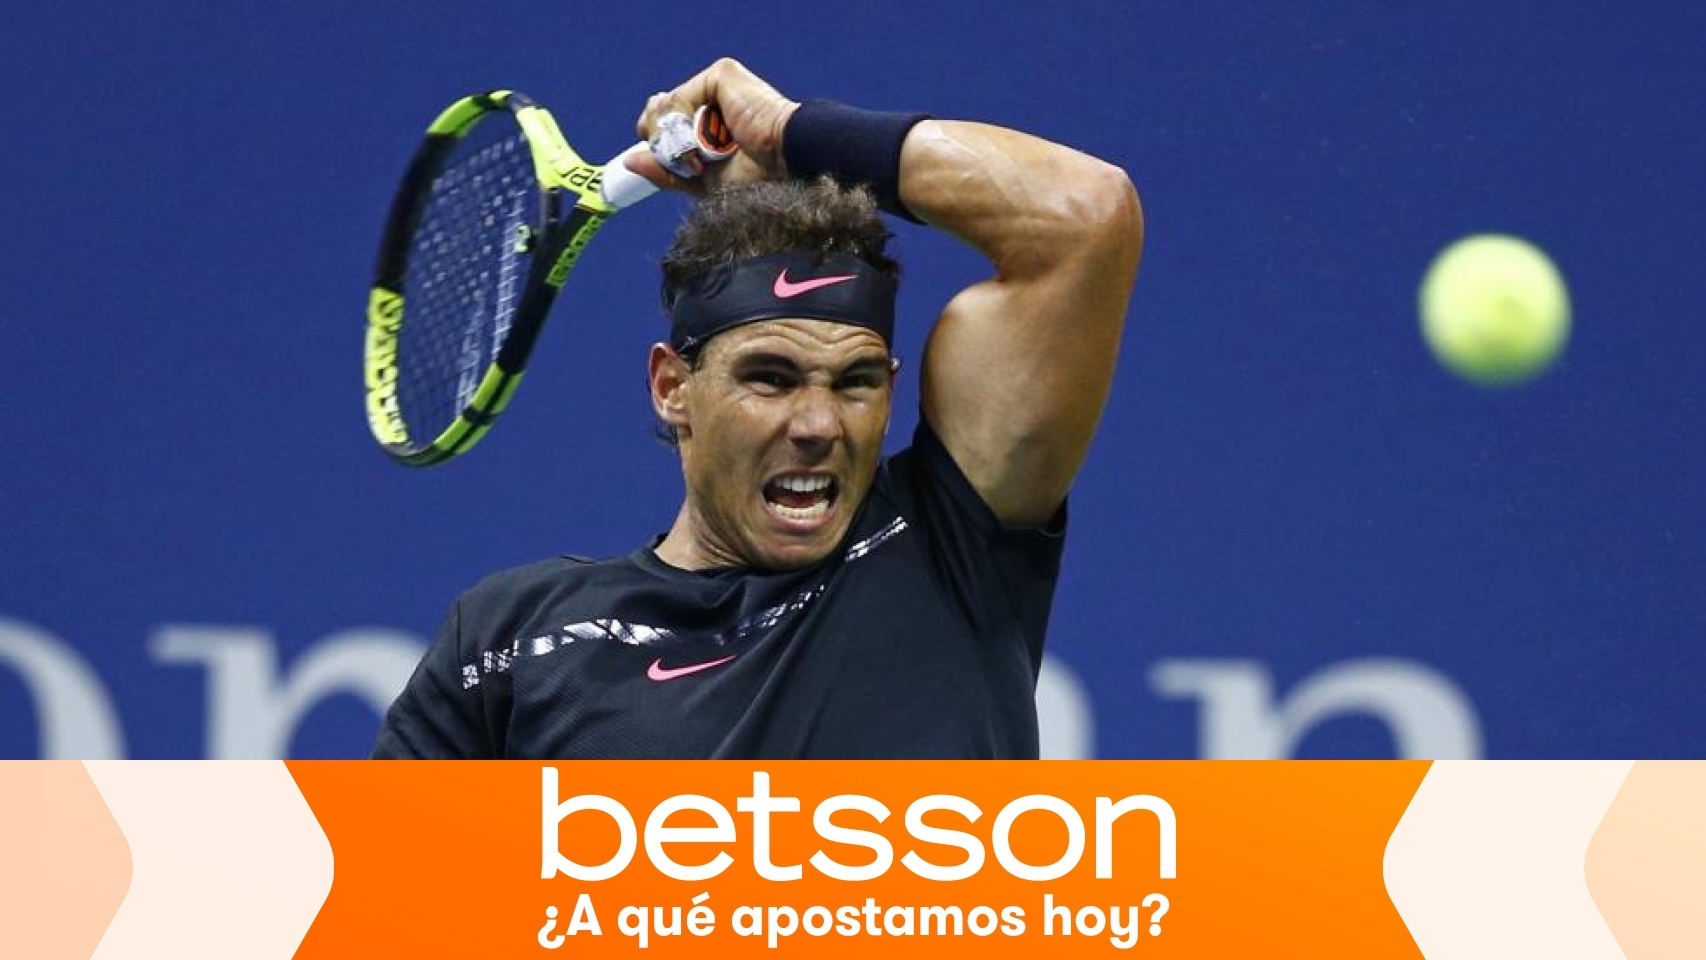 Gana 125 euros si Rafa Nadal se corona campeón en el US Open